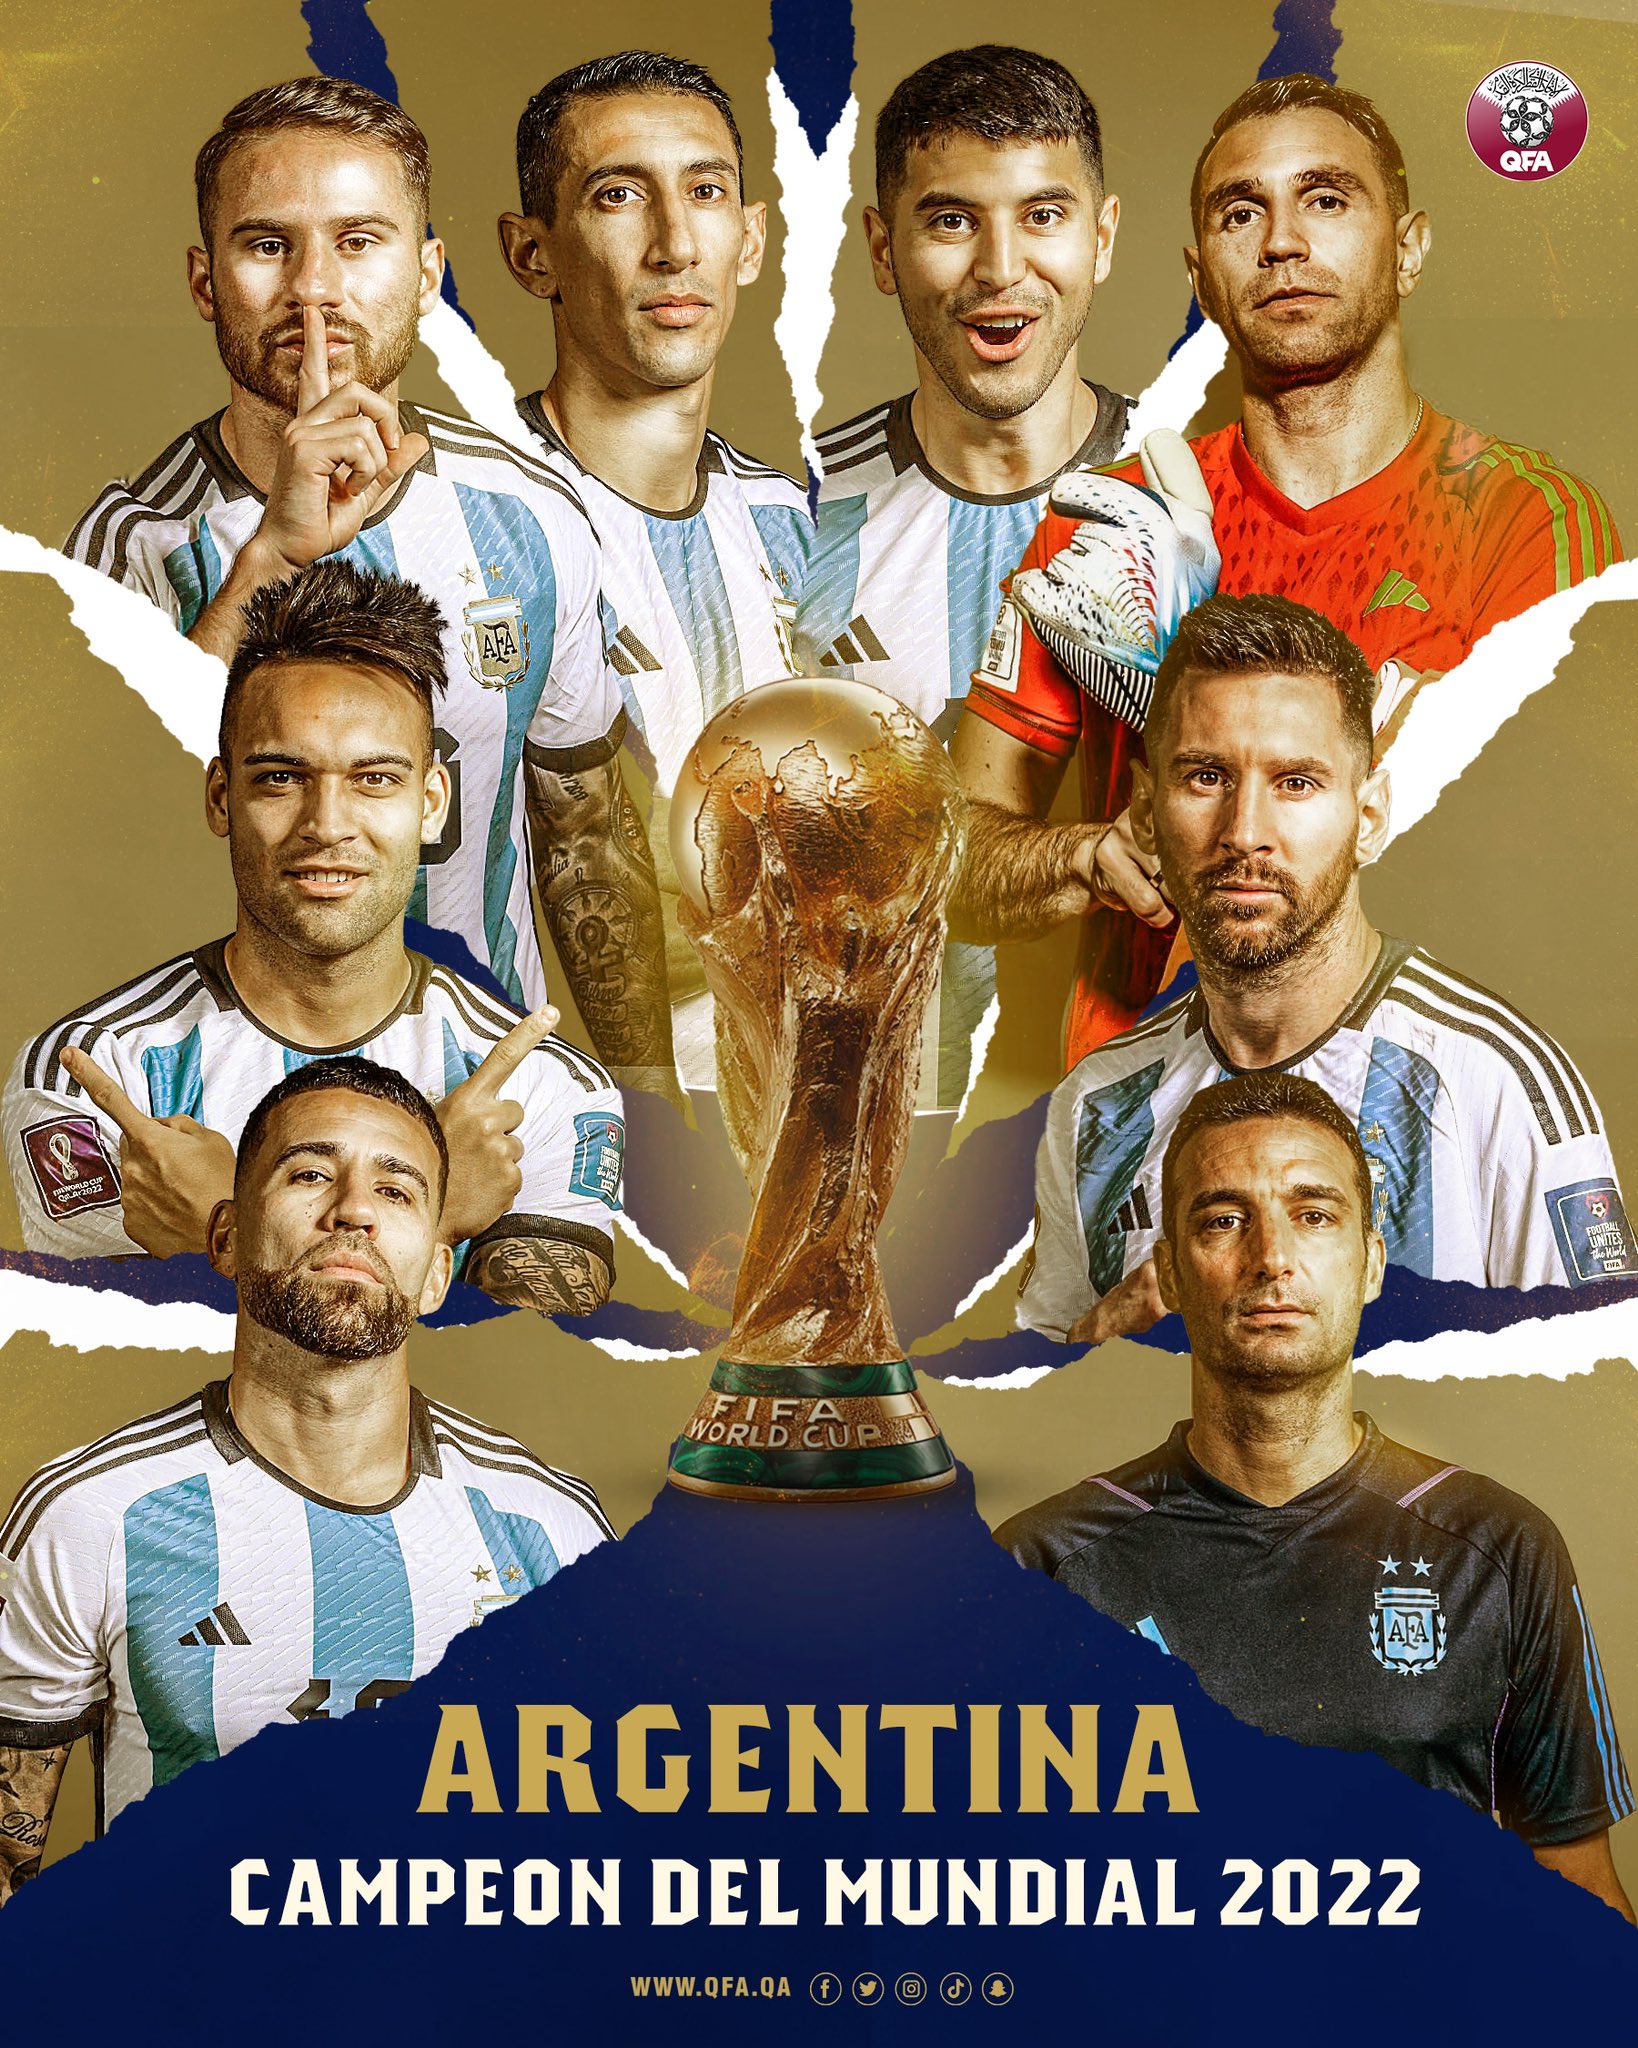 Qatar Football Association on X: Felicidades @Argentina! CAMPEON DEL  MUNDIAL 2022 🇦🇷 🏆 #FIFAWorldCup